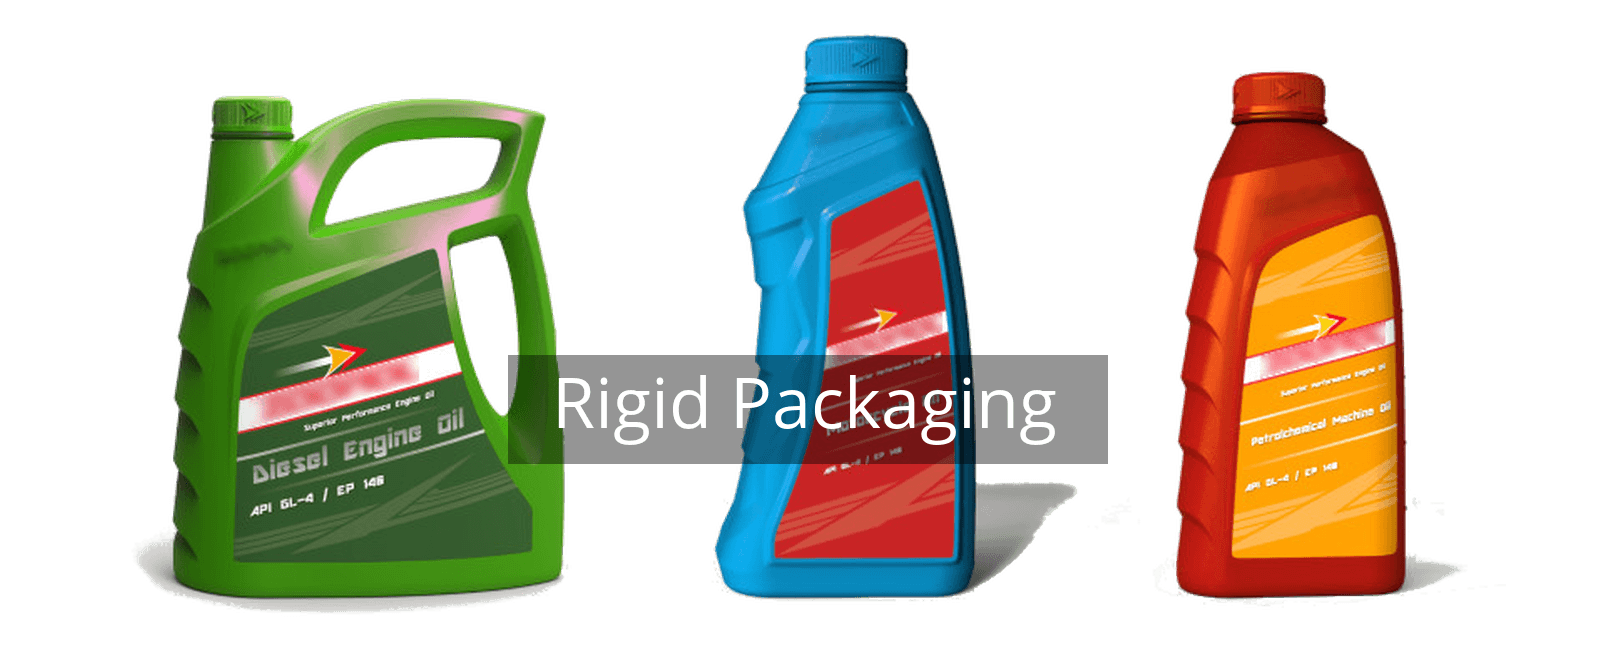 Rigid-packaging-design-tag-min